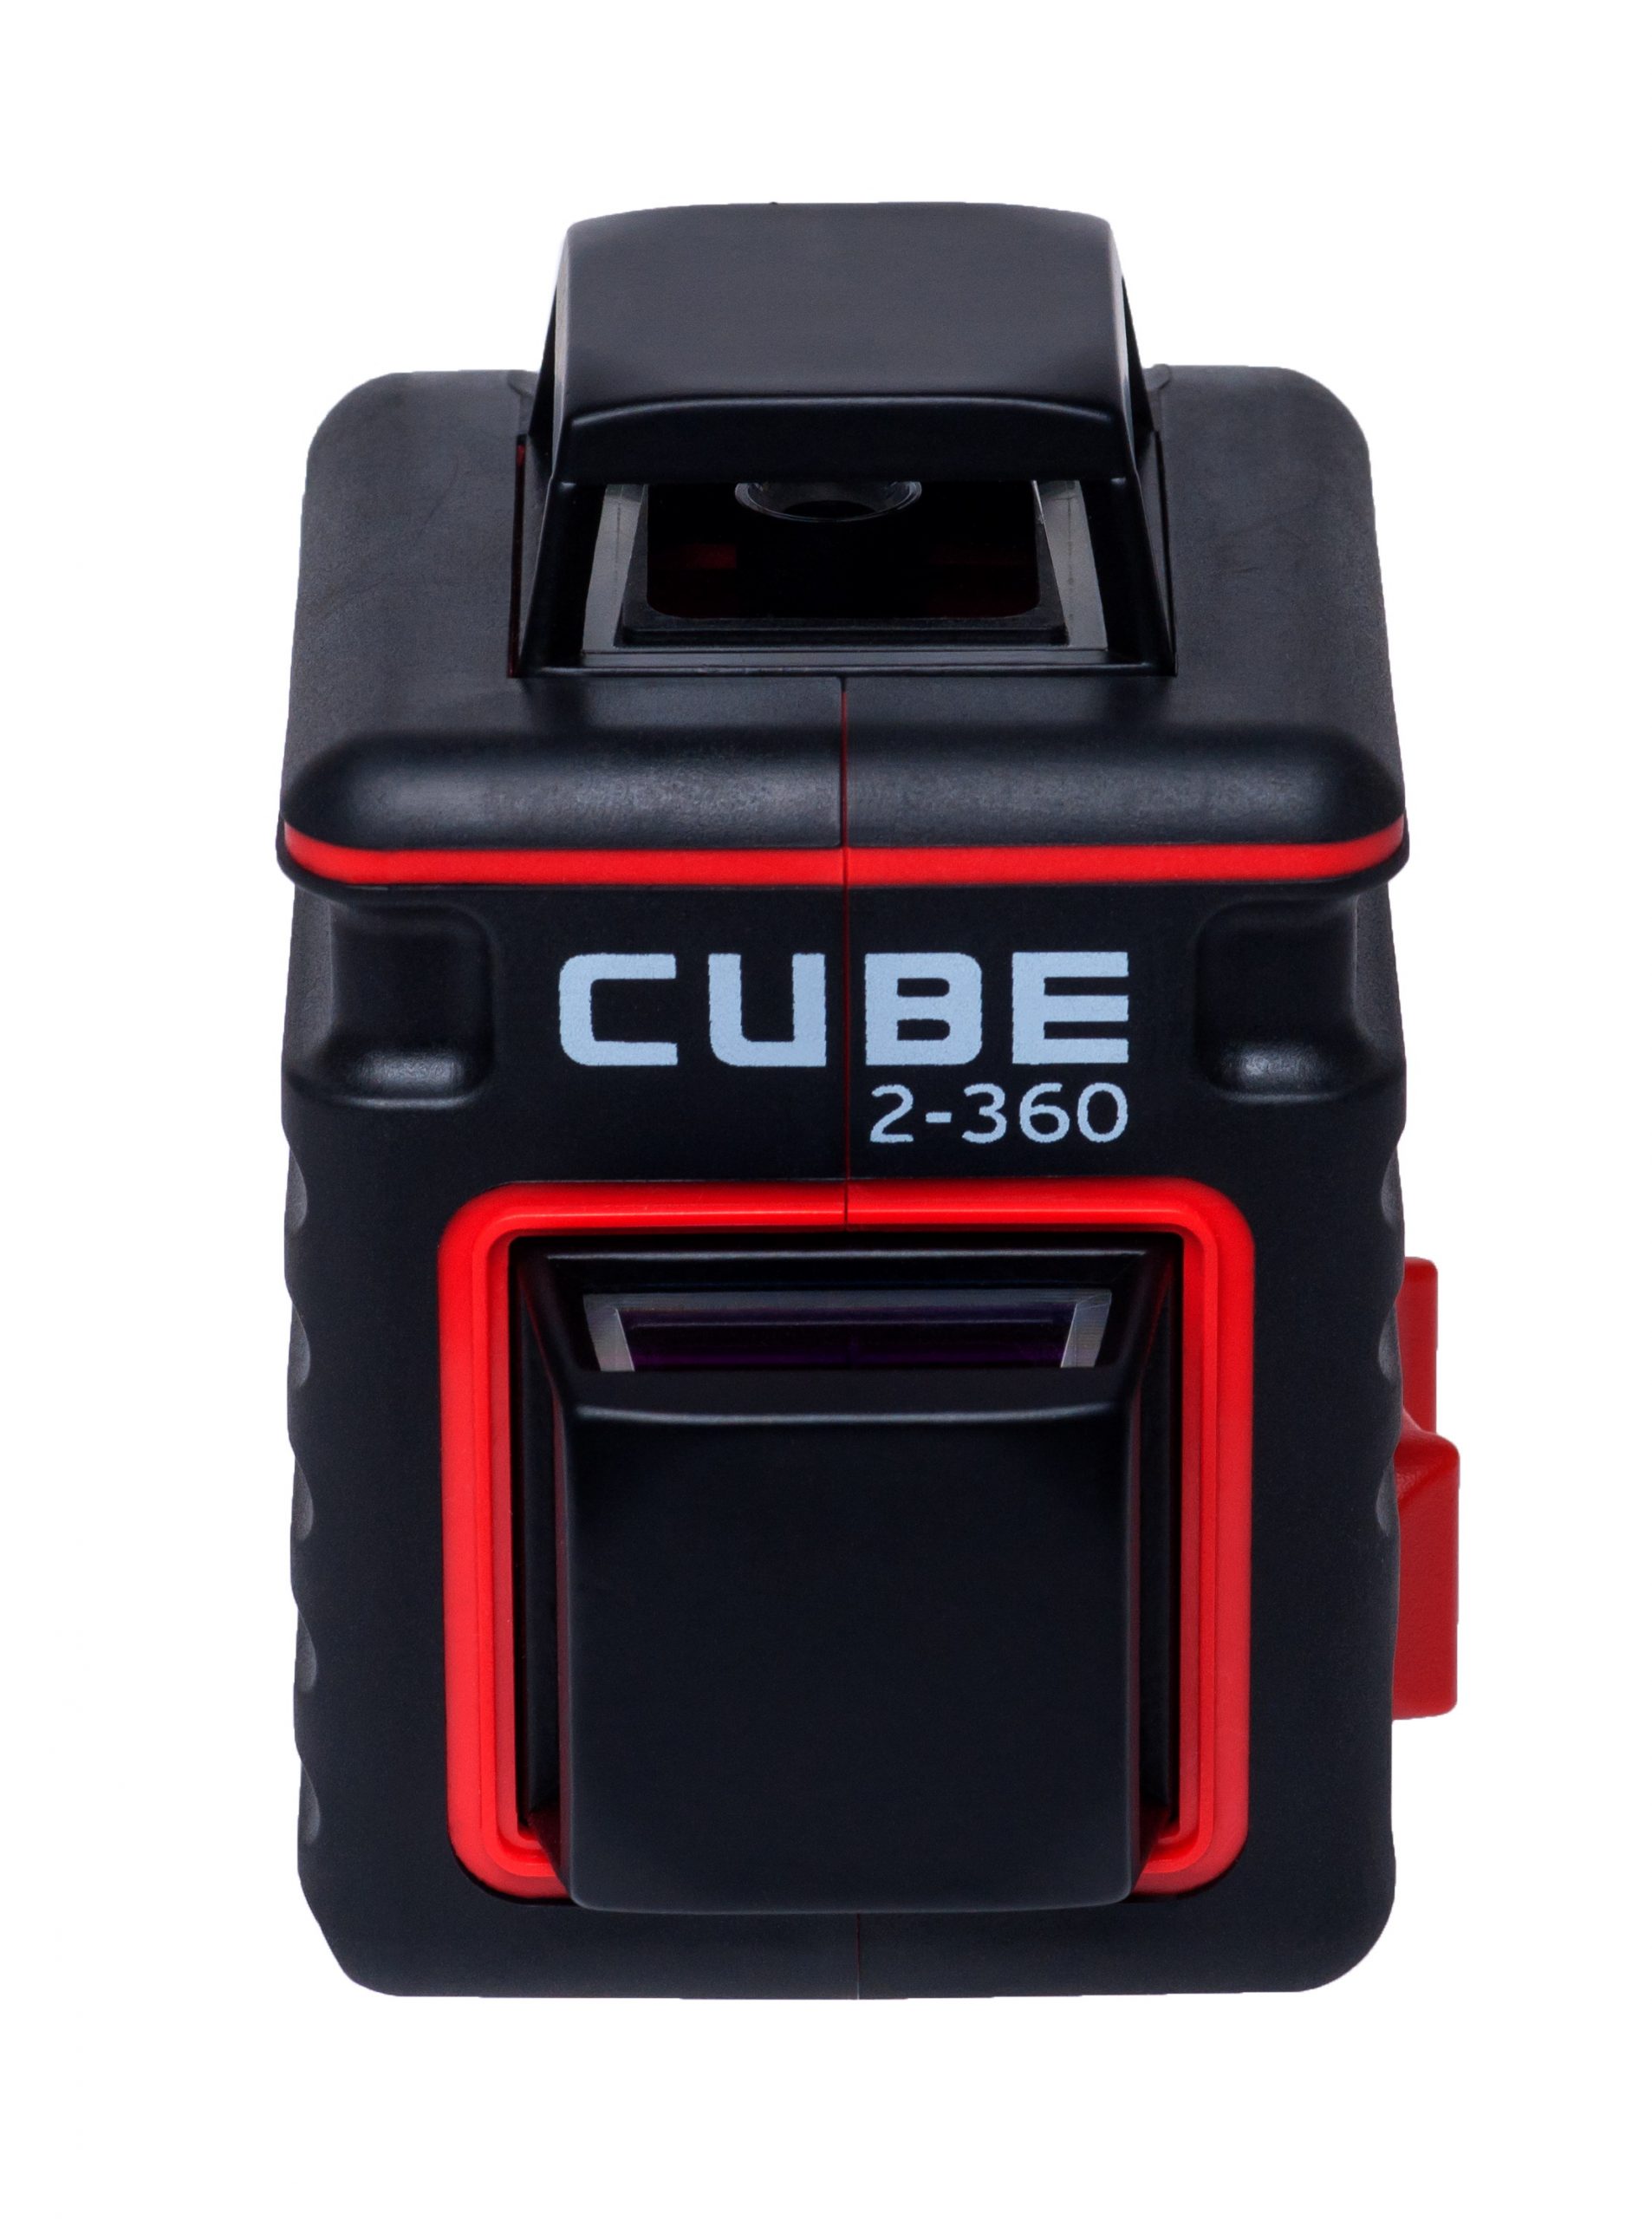 Cube 360 basic edition. Нивелир лазерный ada Cube 360. Ada instruments Cube 2-360 Basic Edition. Ada Cube 2-360 professional Edition а00449. Лазерный уровень Cube 3-360 Basic Edition.